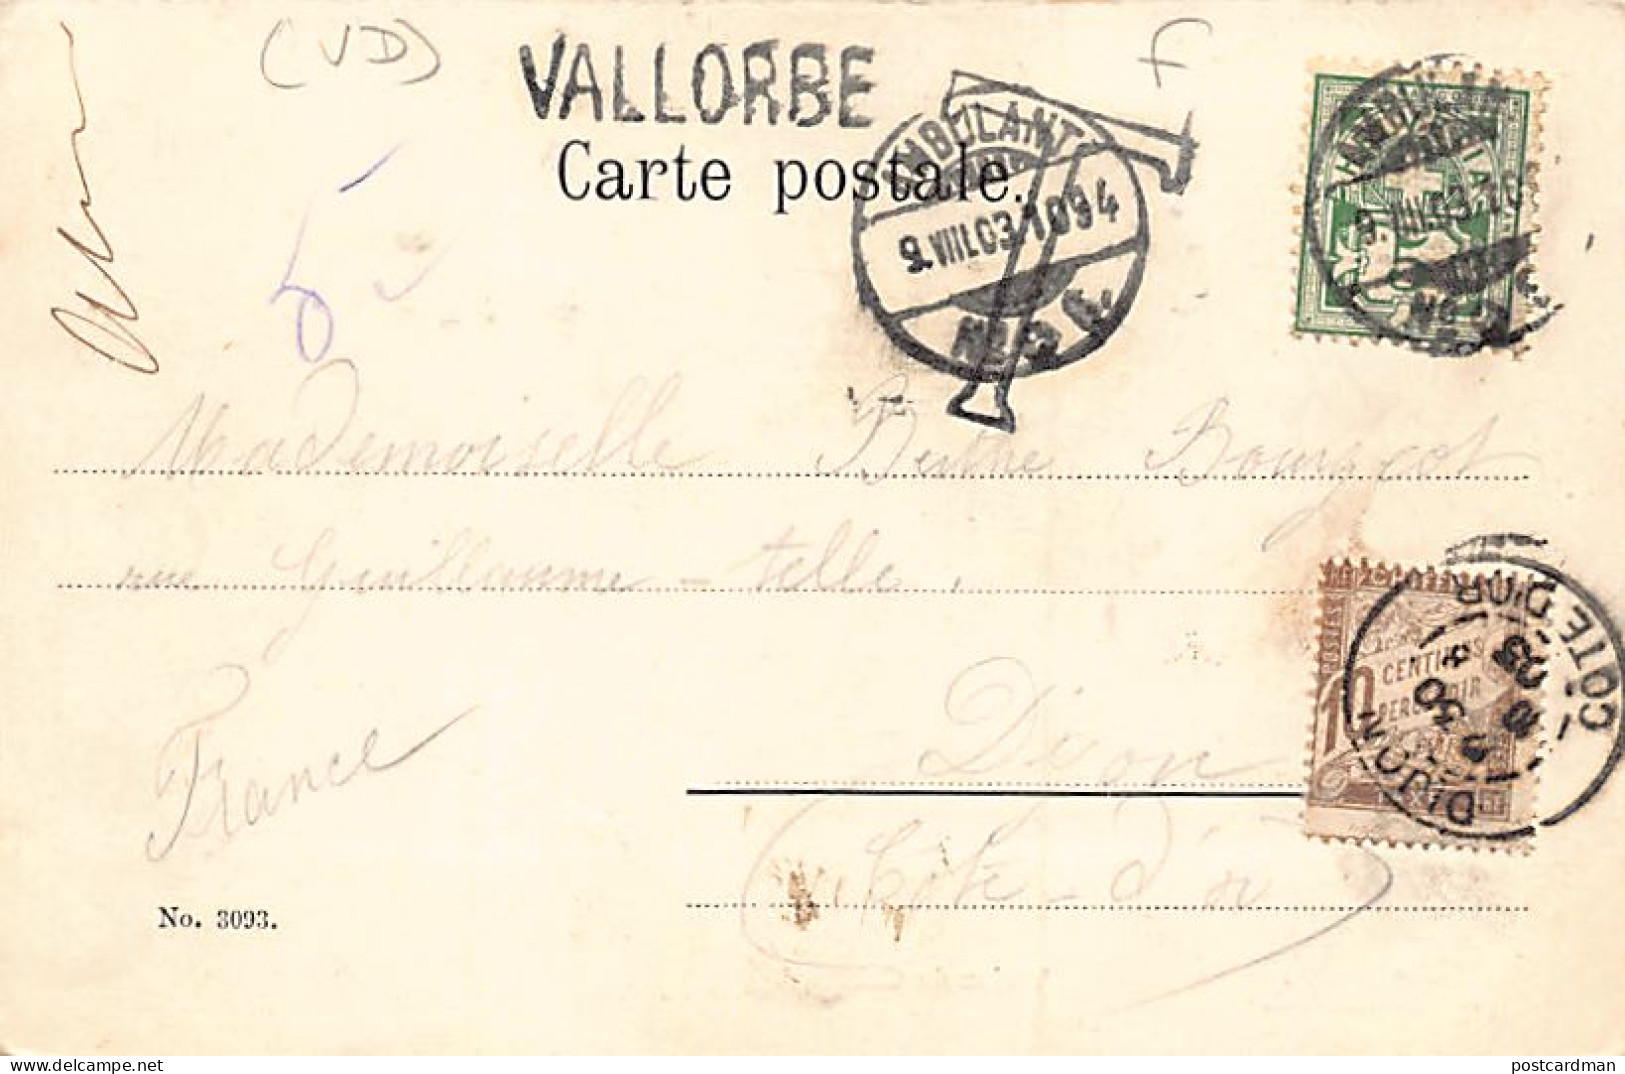 VALLORBE (VD) Viaduc Du Châtelard - Ed. M.C. 3093 - Vallorbe